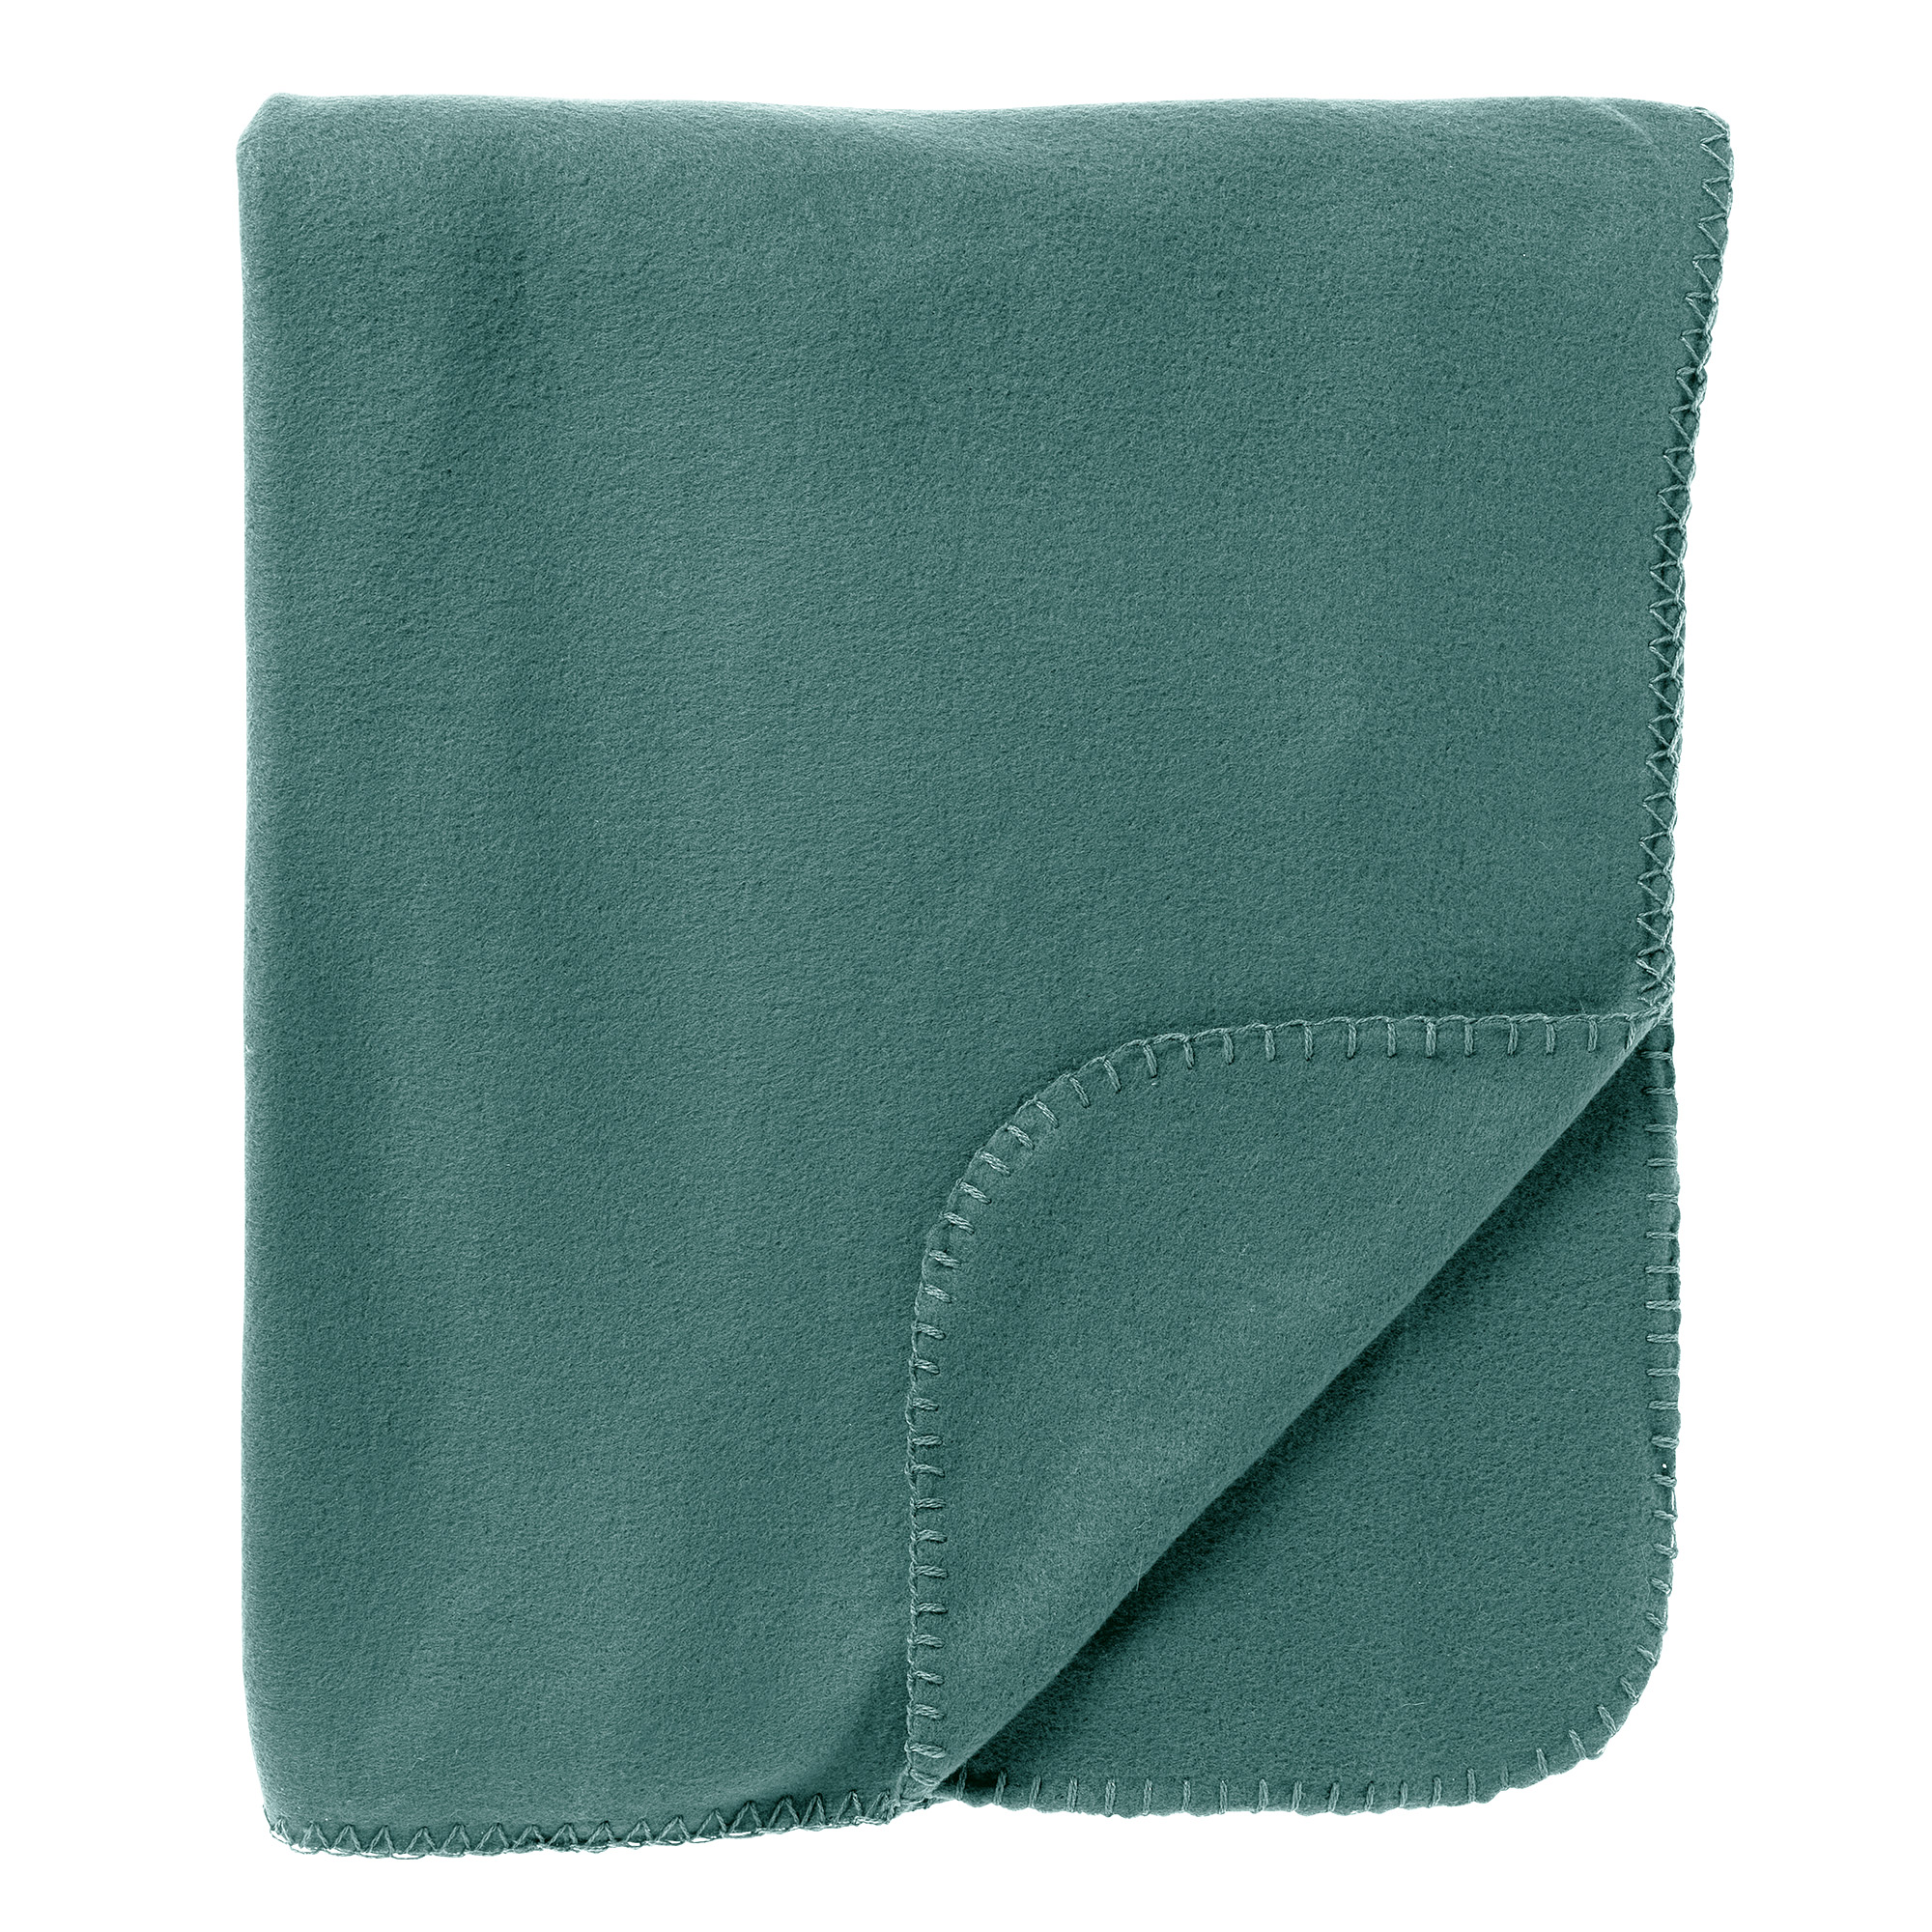 PABLO - Plaid 150x200 cm -Sagebrush Green - green - 100% polyester 